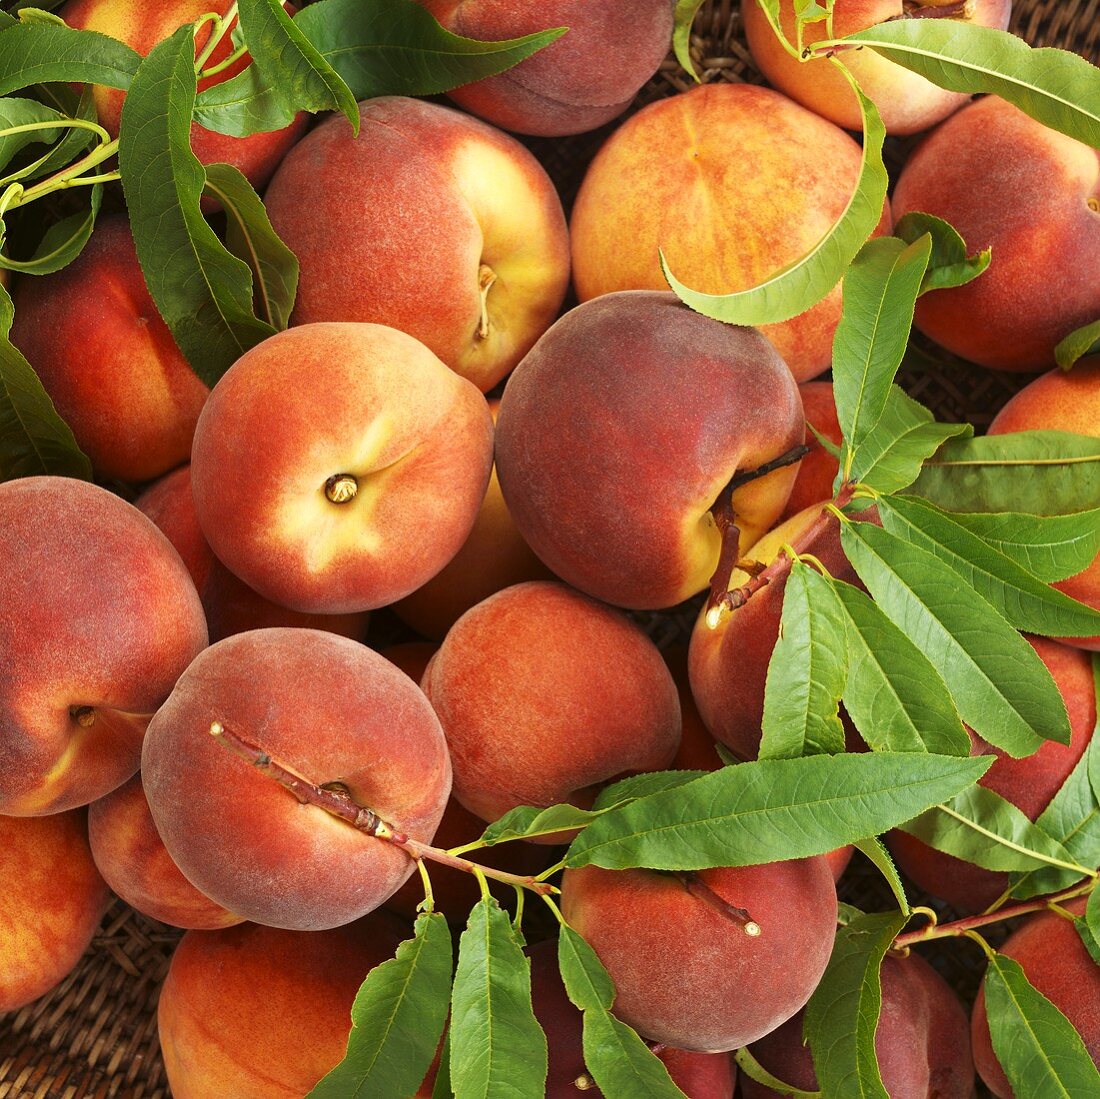 Organic peaches in a basket (close-up)